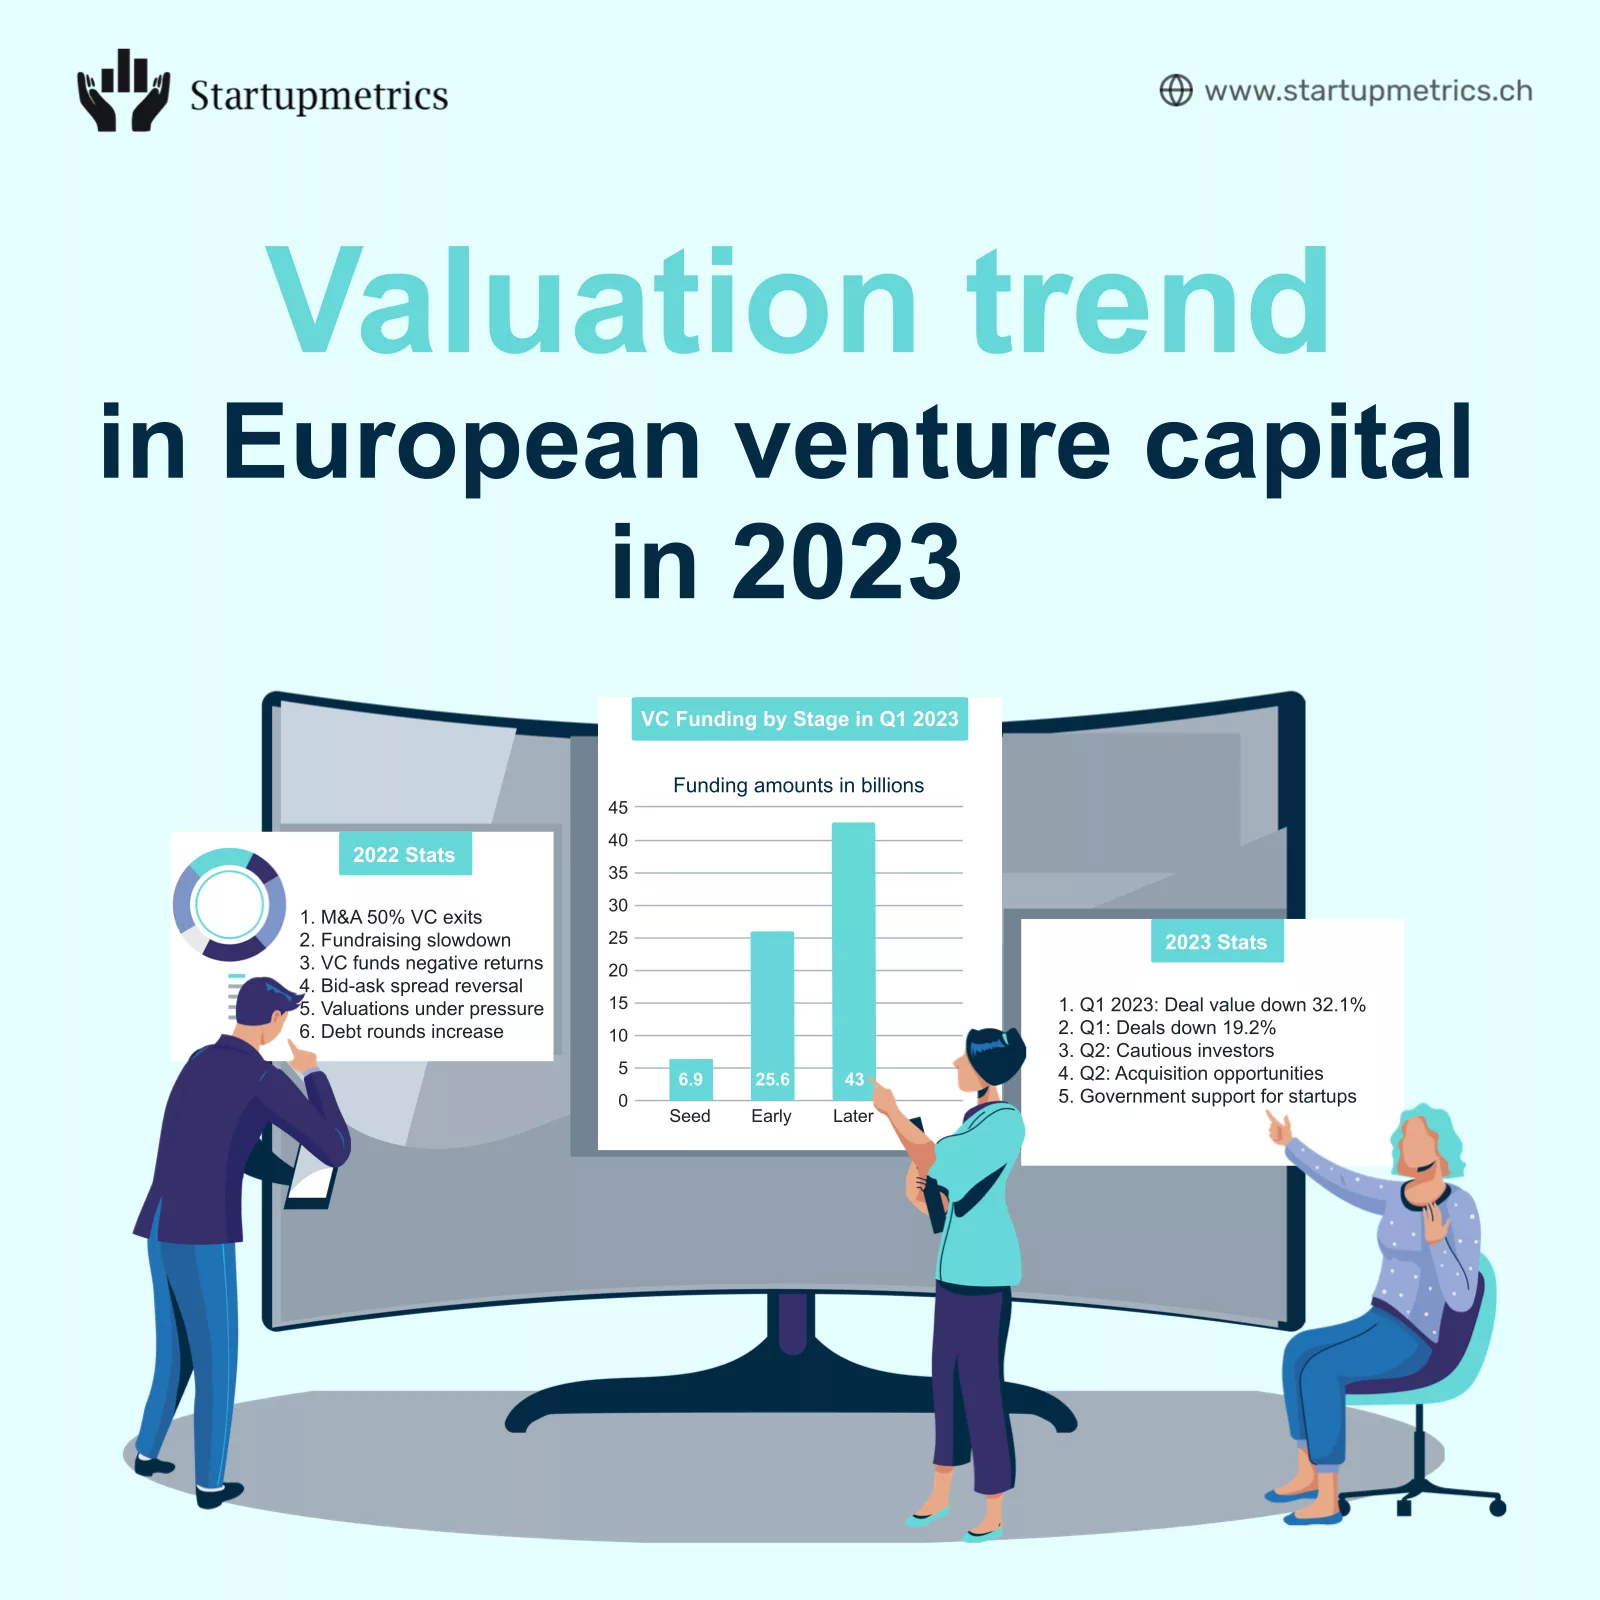 Valuation trend in European venture capital in 2023